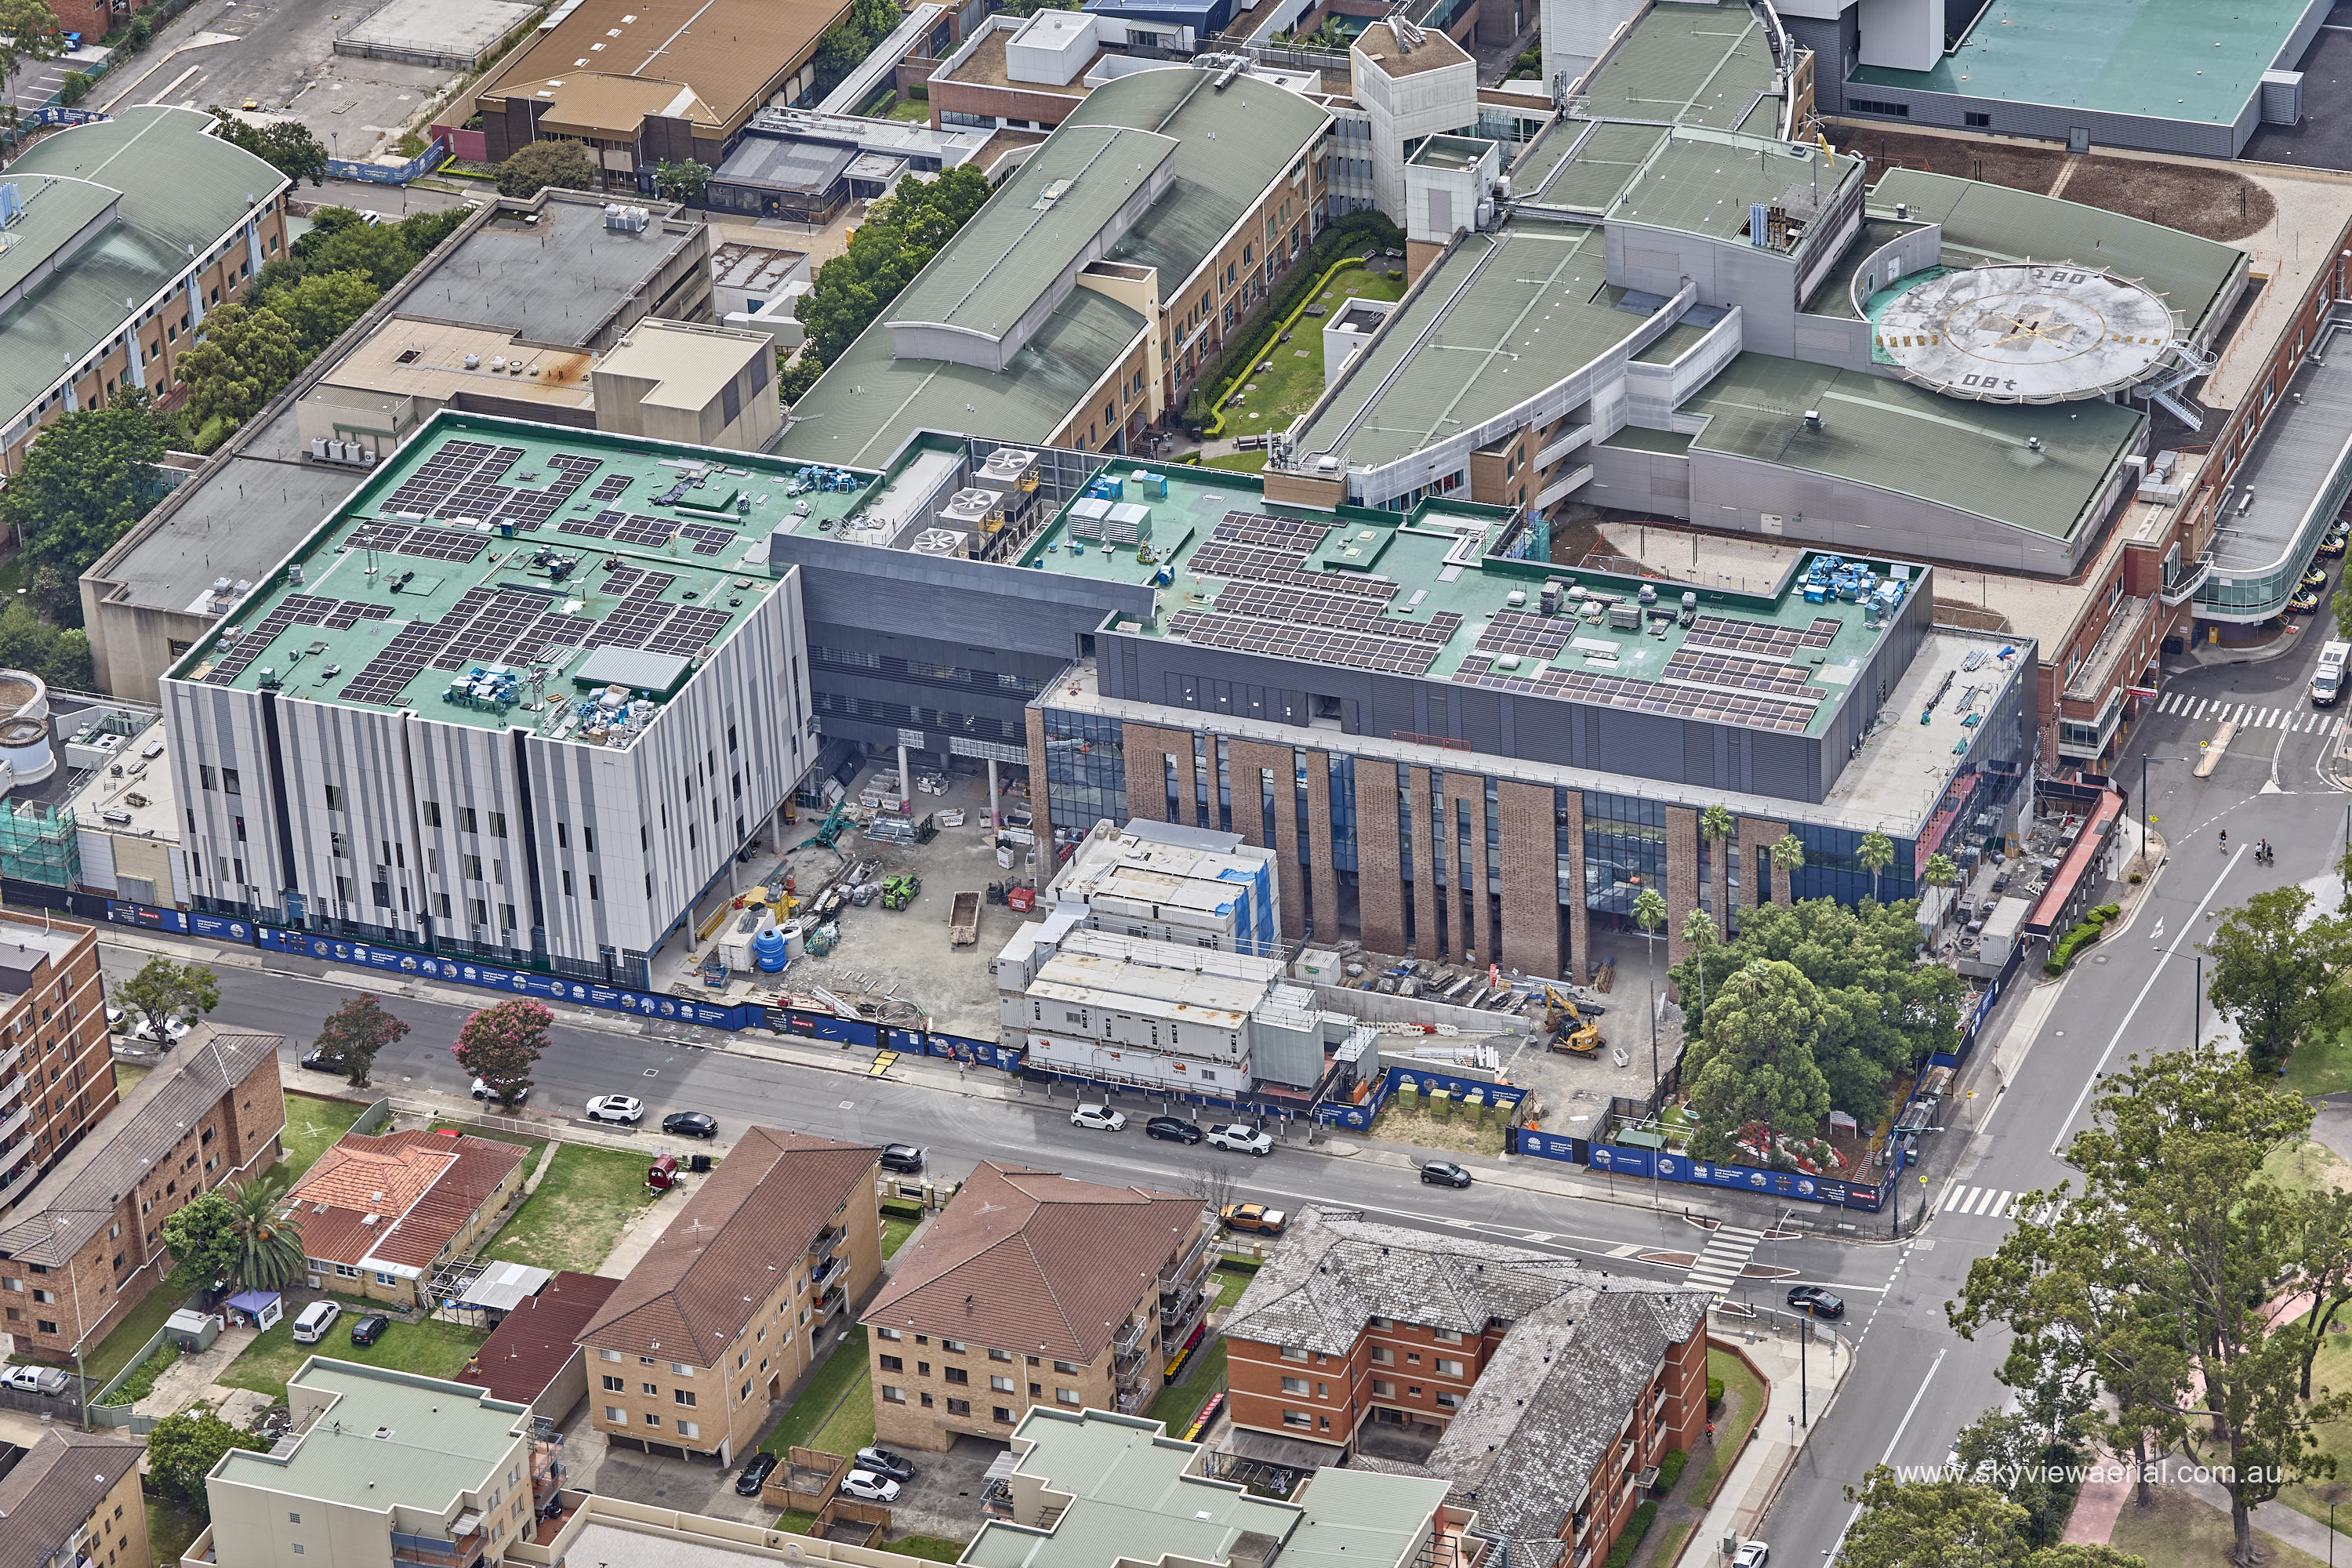 Liverpool Health and Academic Precinct updates Liverpool Hospital Redevelopment